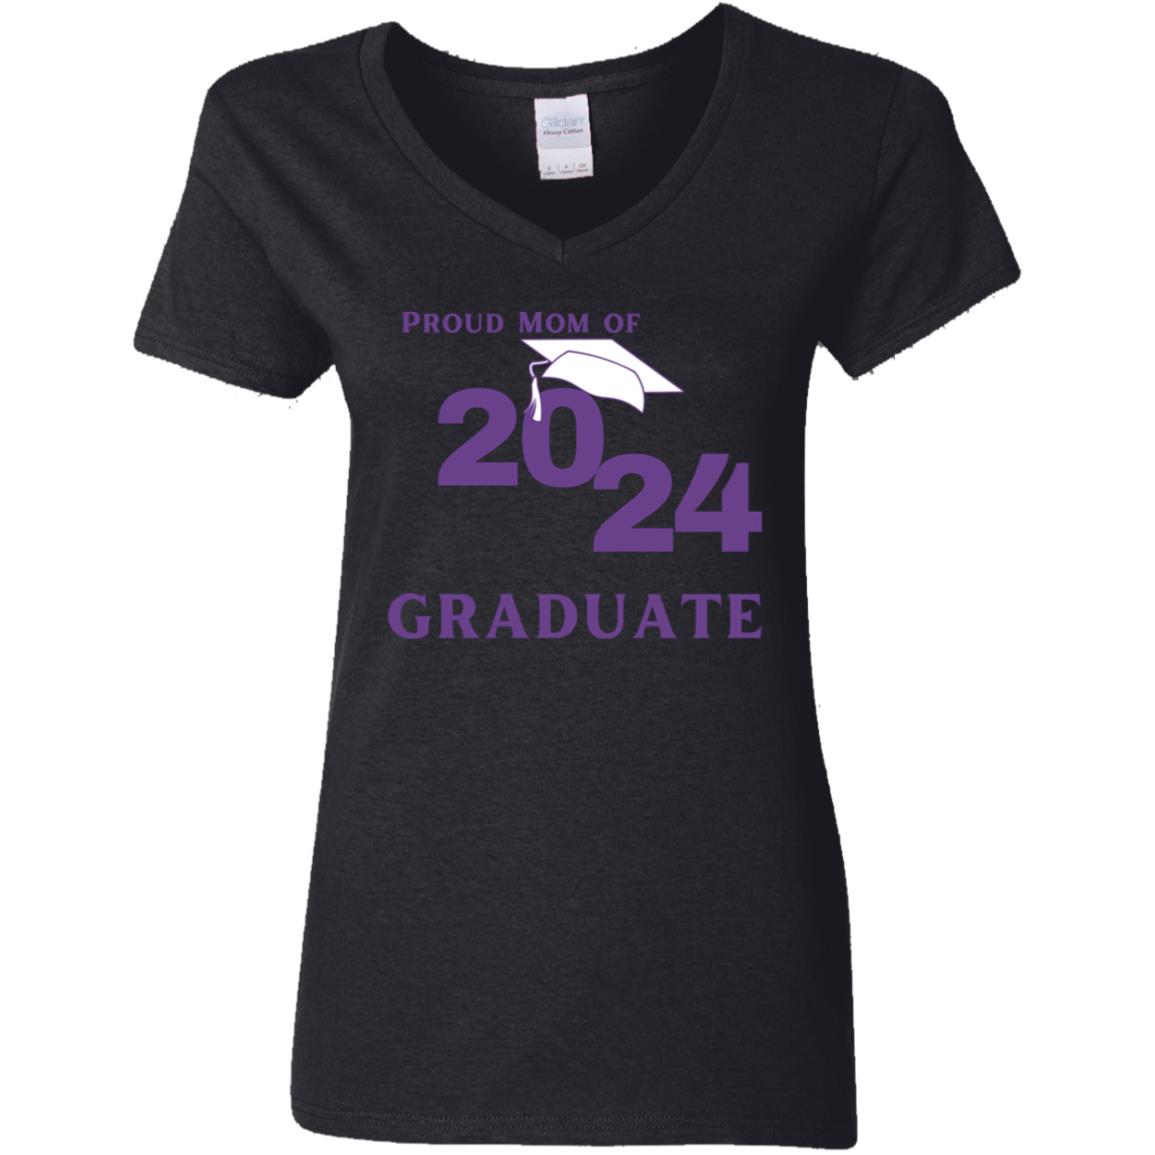 Proud Mom -- Graduate 2024 -- Ladies' V-Neck T-Shirt